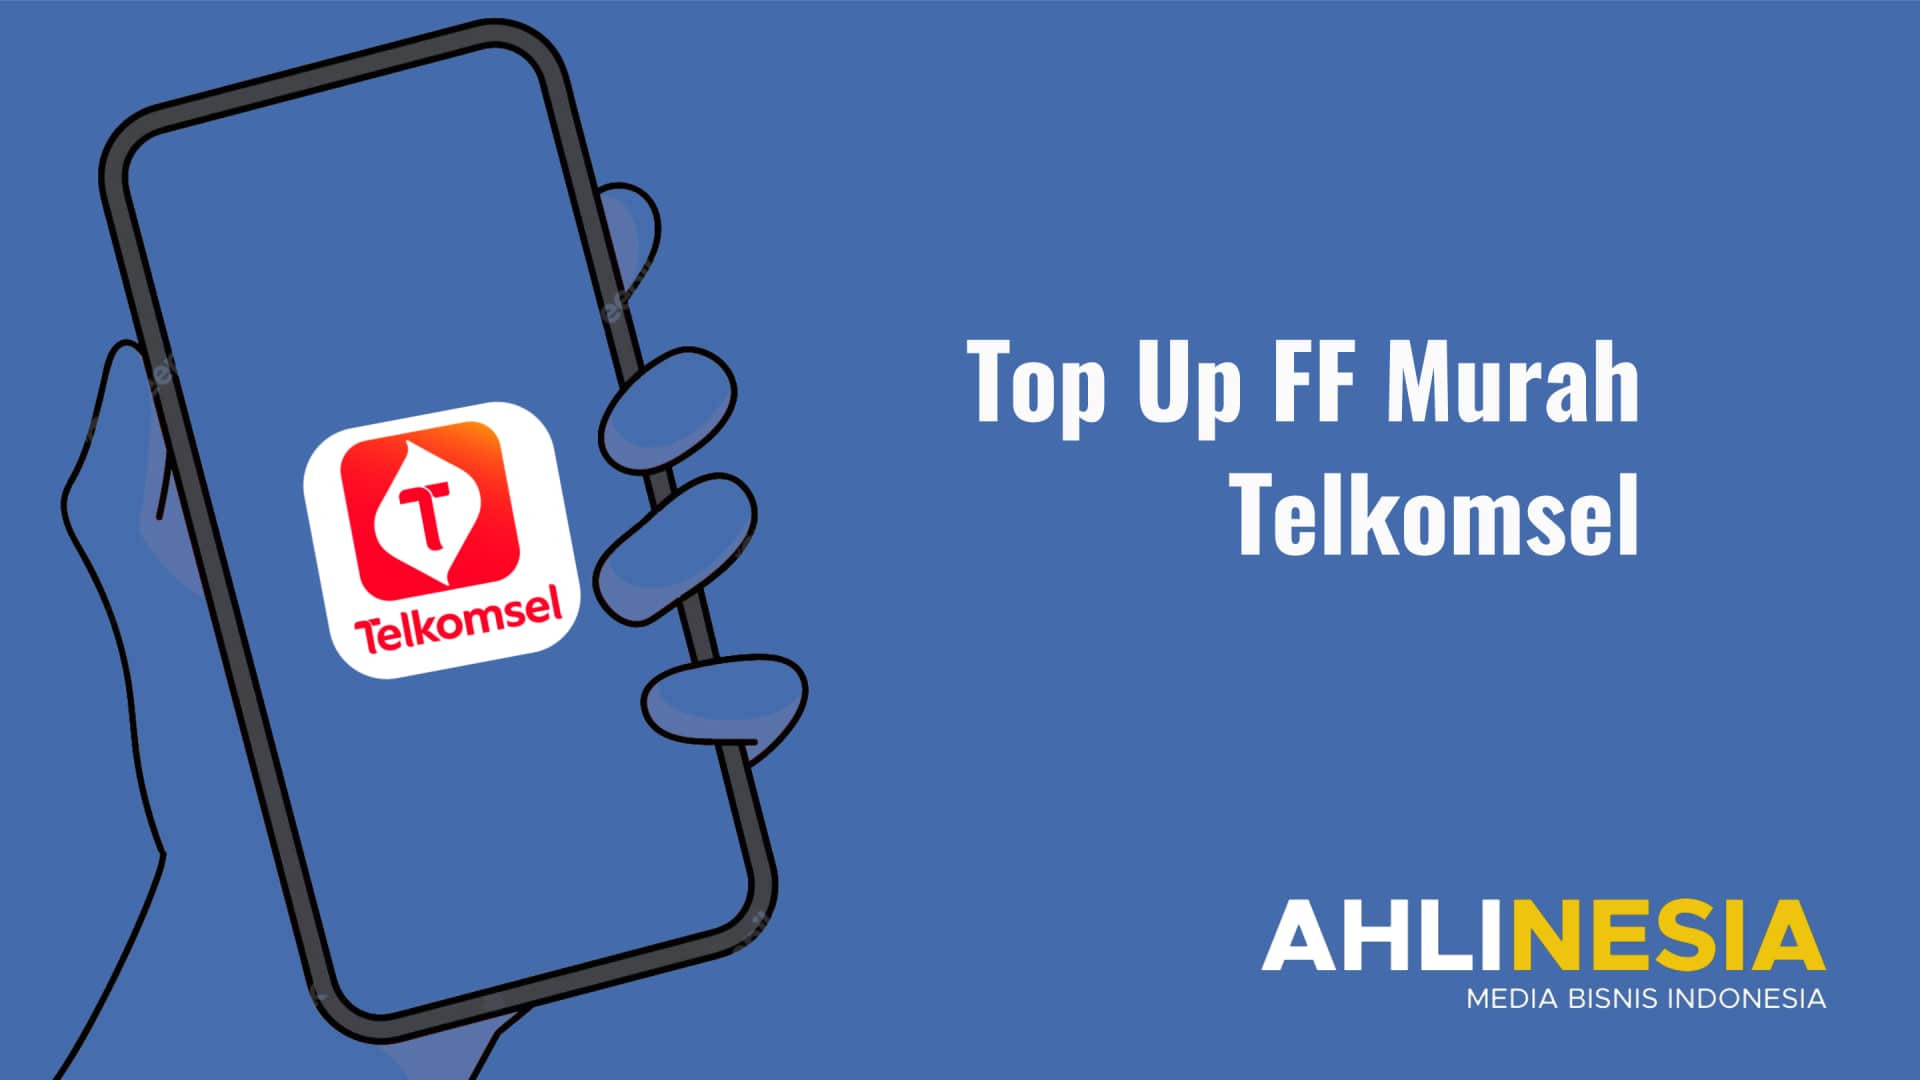 Top Up FF Murah Telkomsel